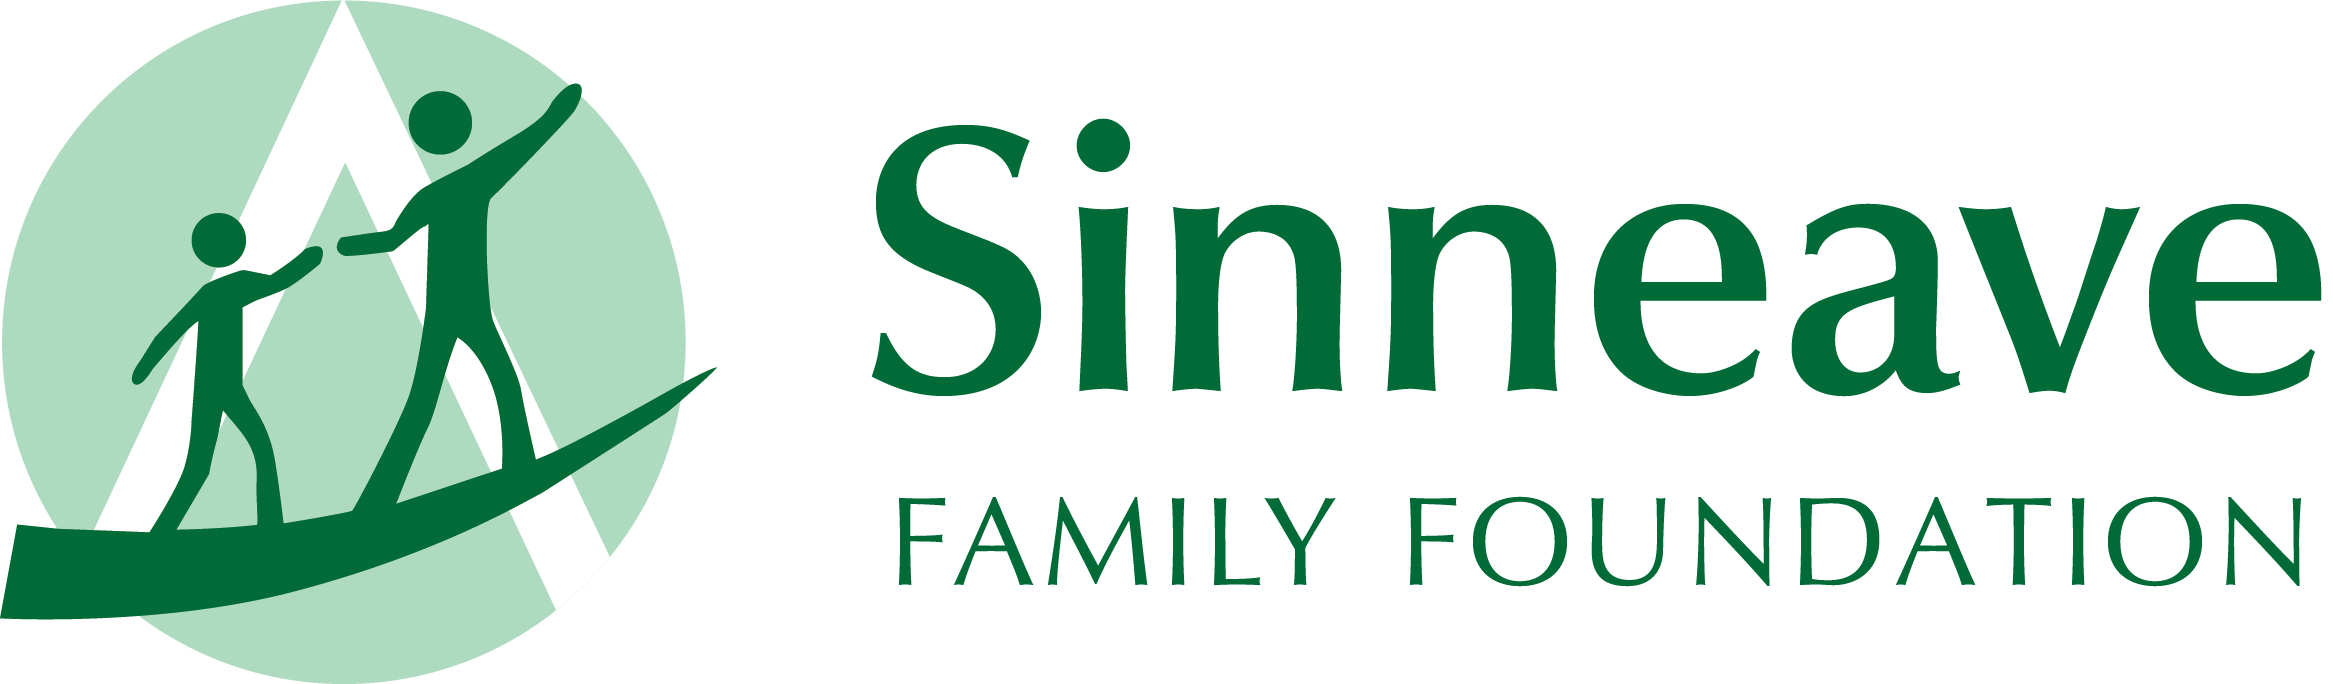 Sinneave Family Foundation